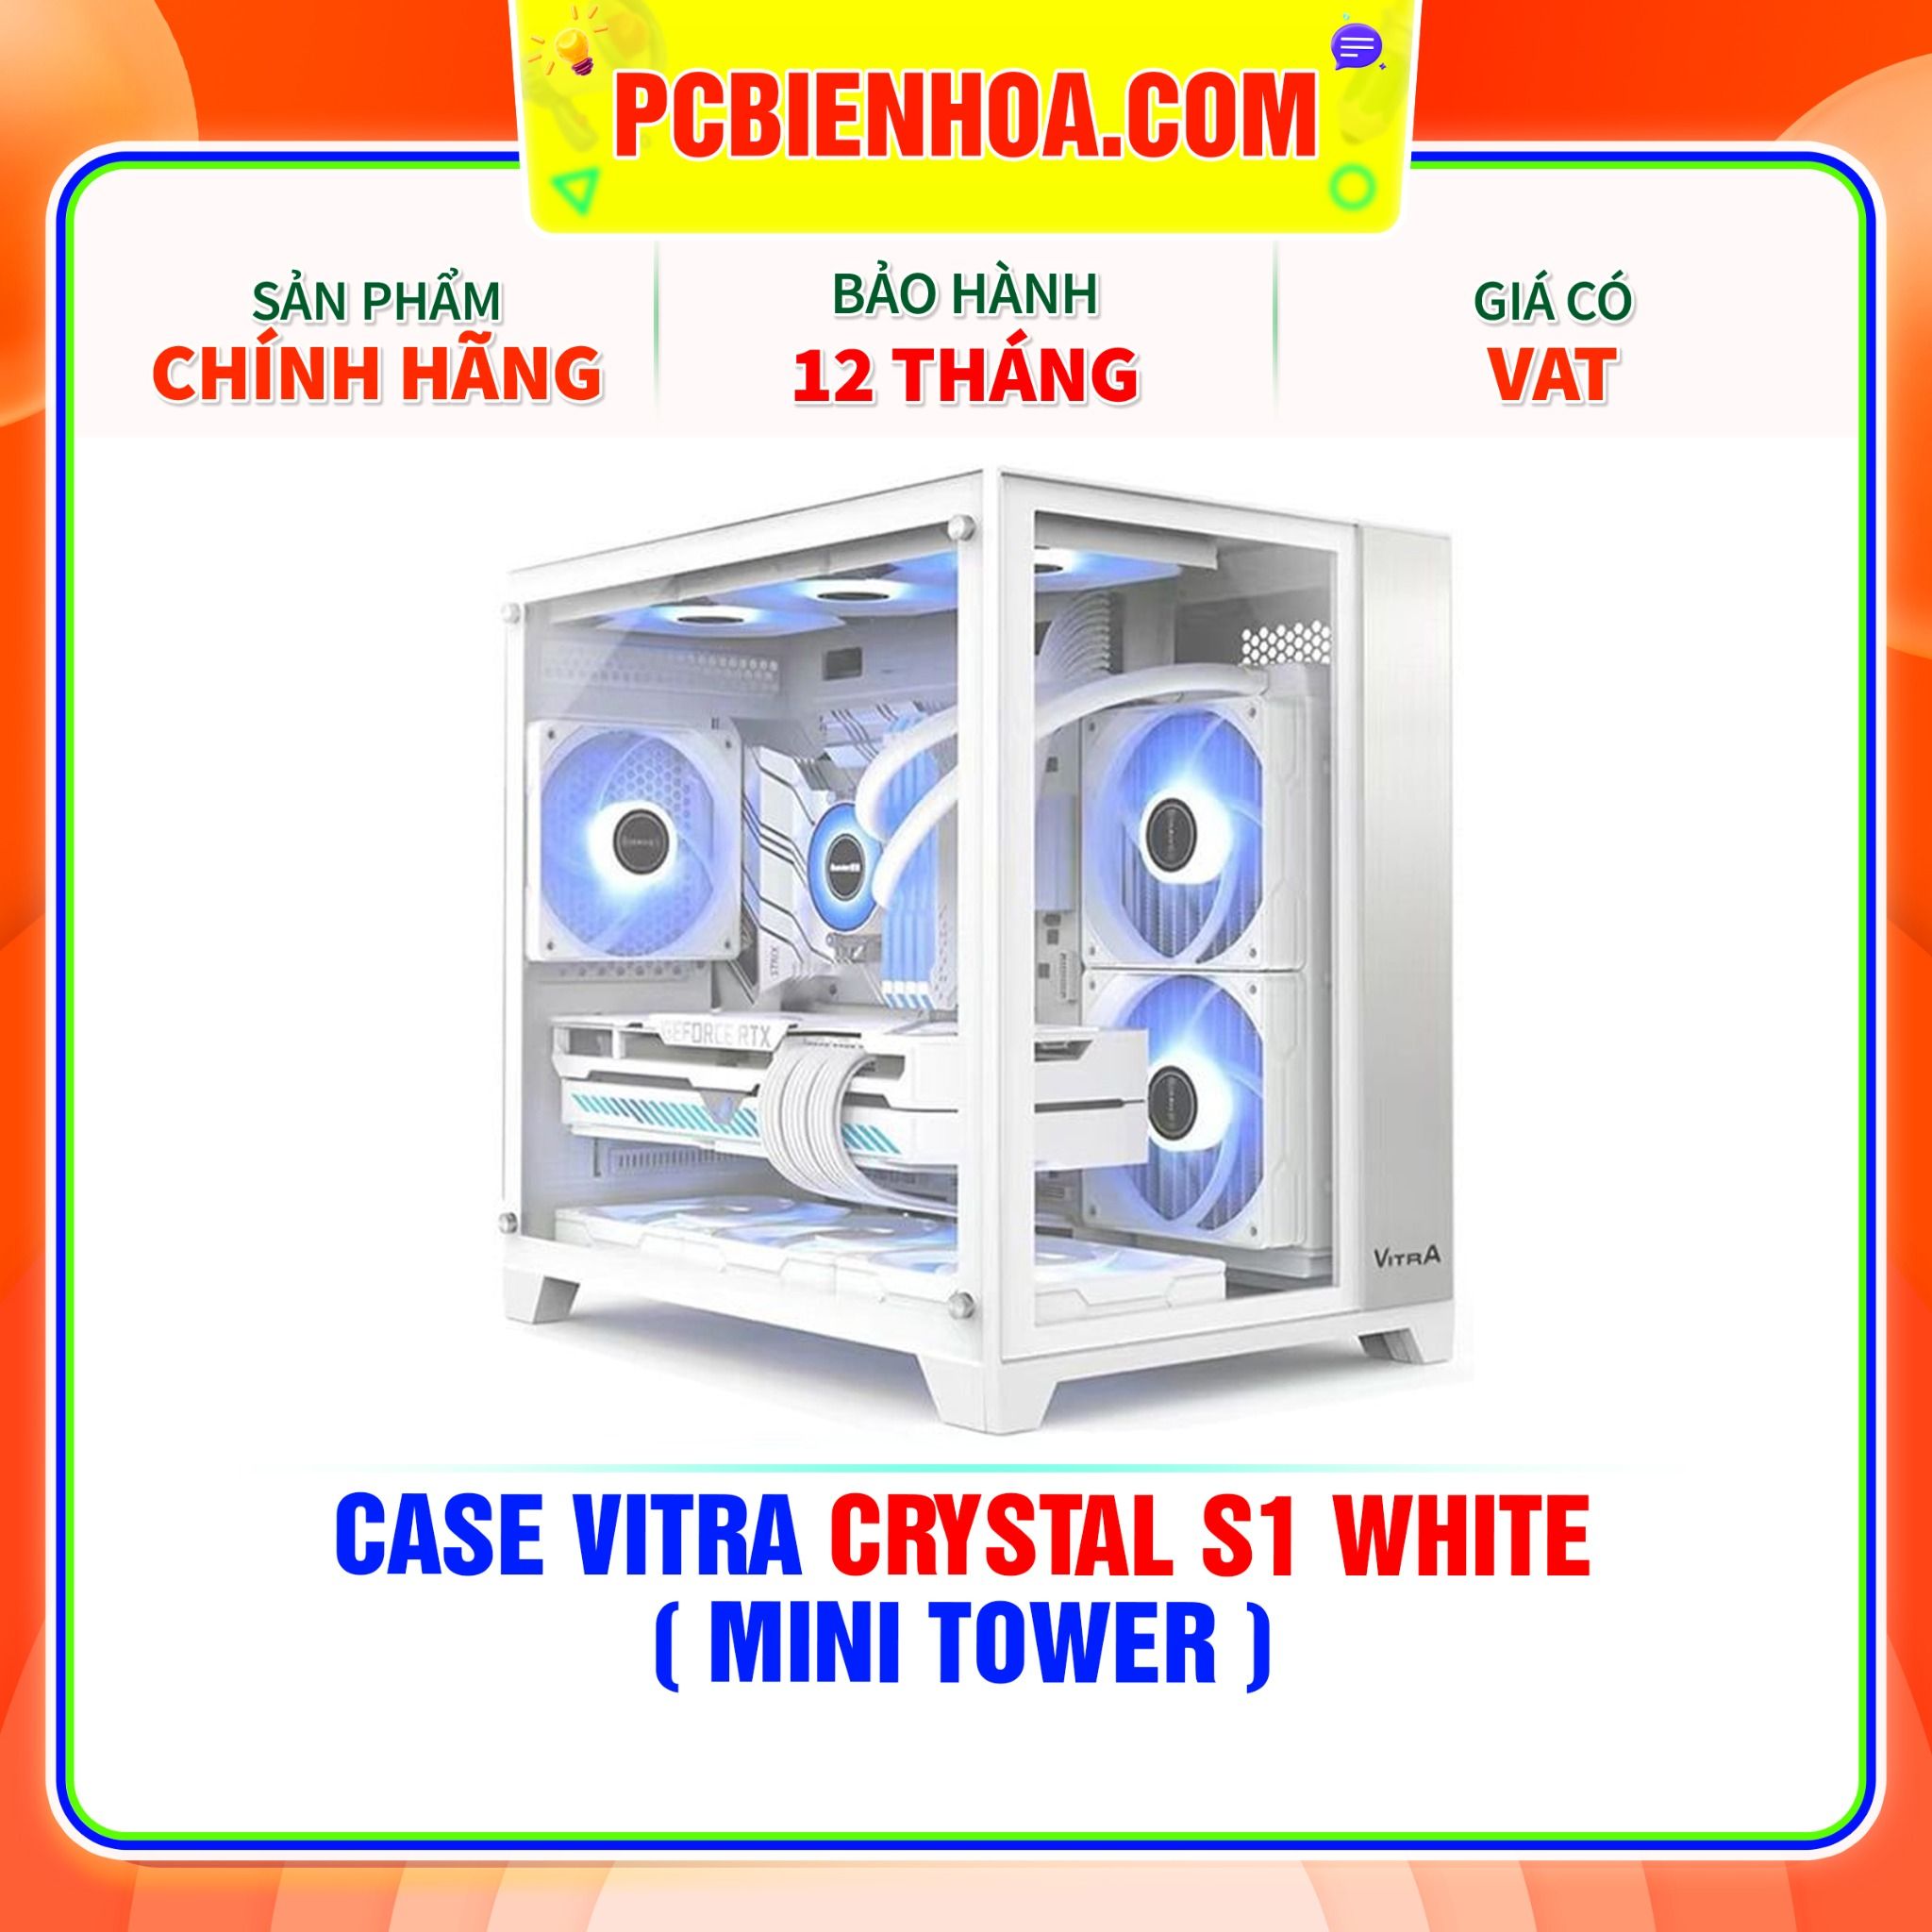  CASE VITRA CRYSTAL S1 WHITE ( MINI TOWER ) 